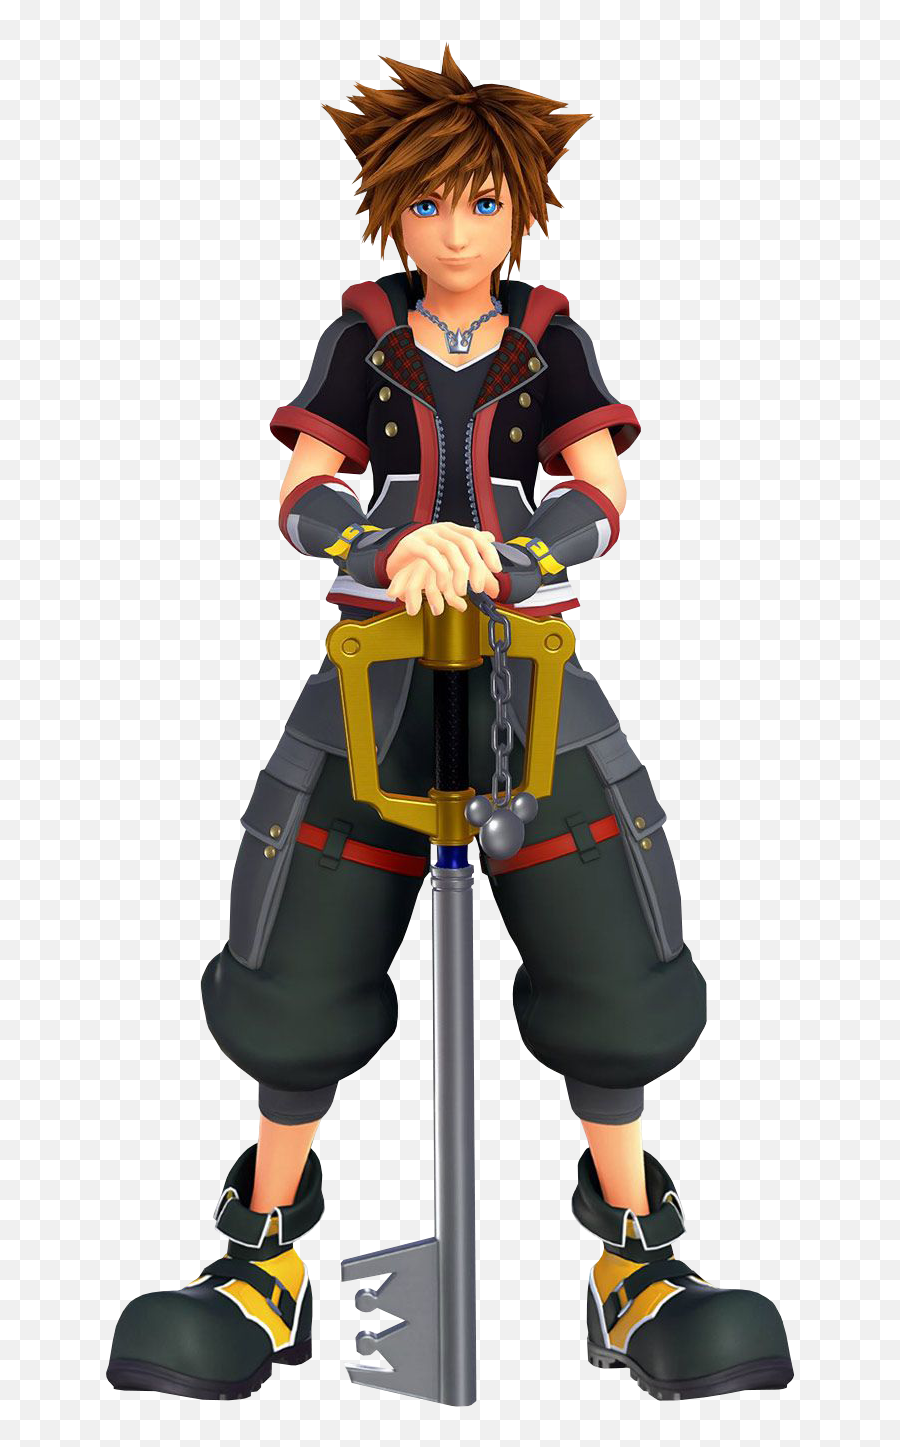 Most Iconic Kingdom Hearts Keyblades - Kingdom Hearts 3 Sora Png,Roxas Kingdom Hearts Icon